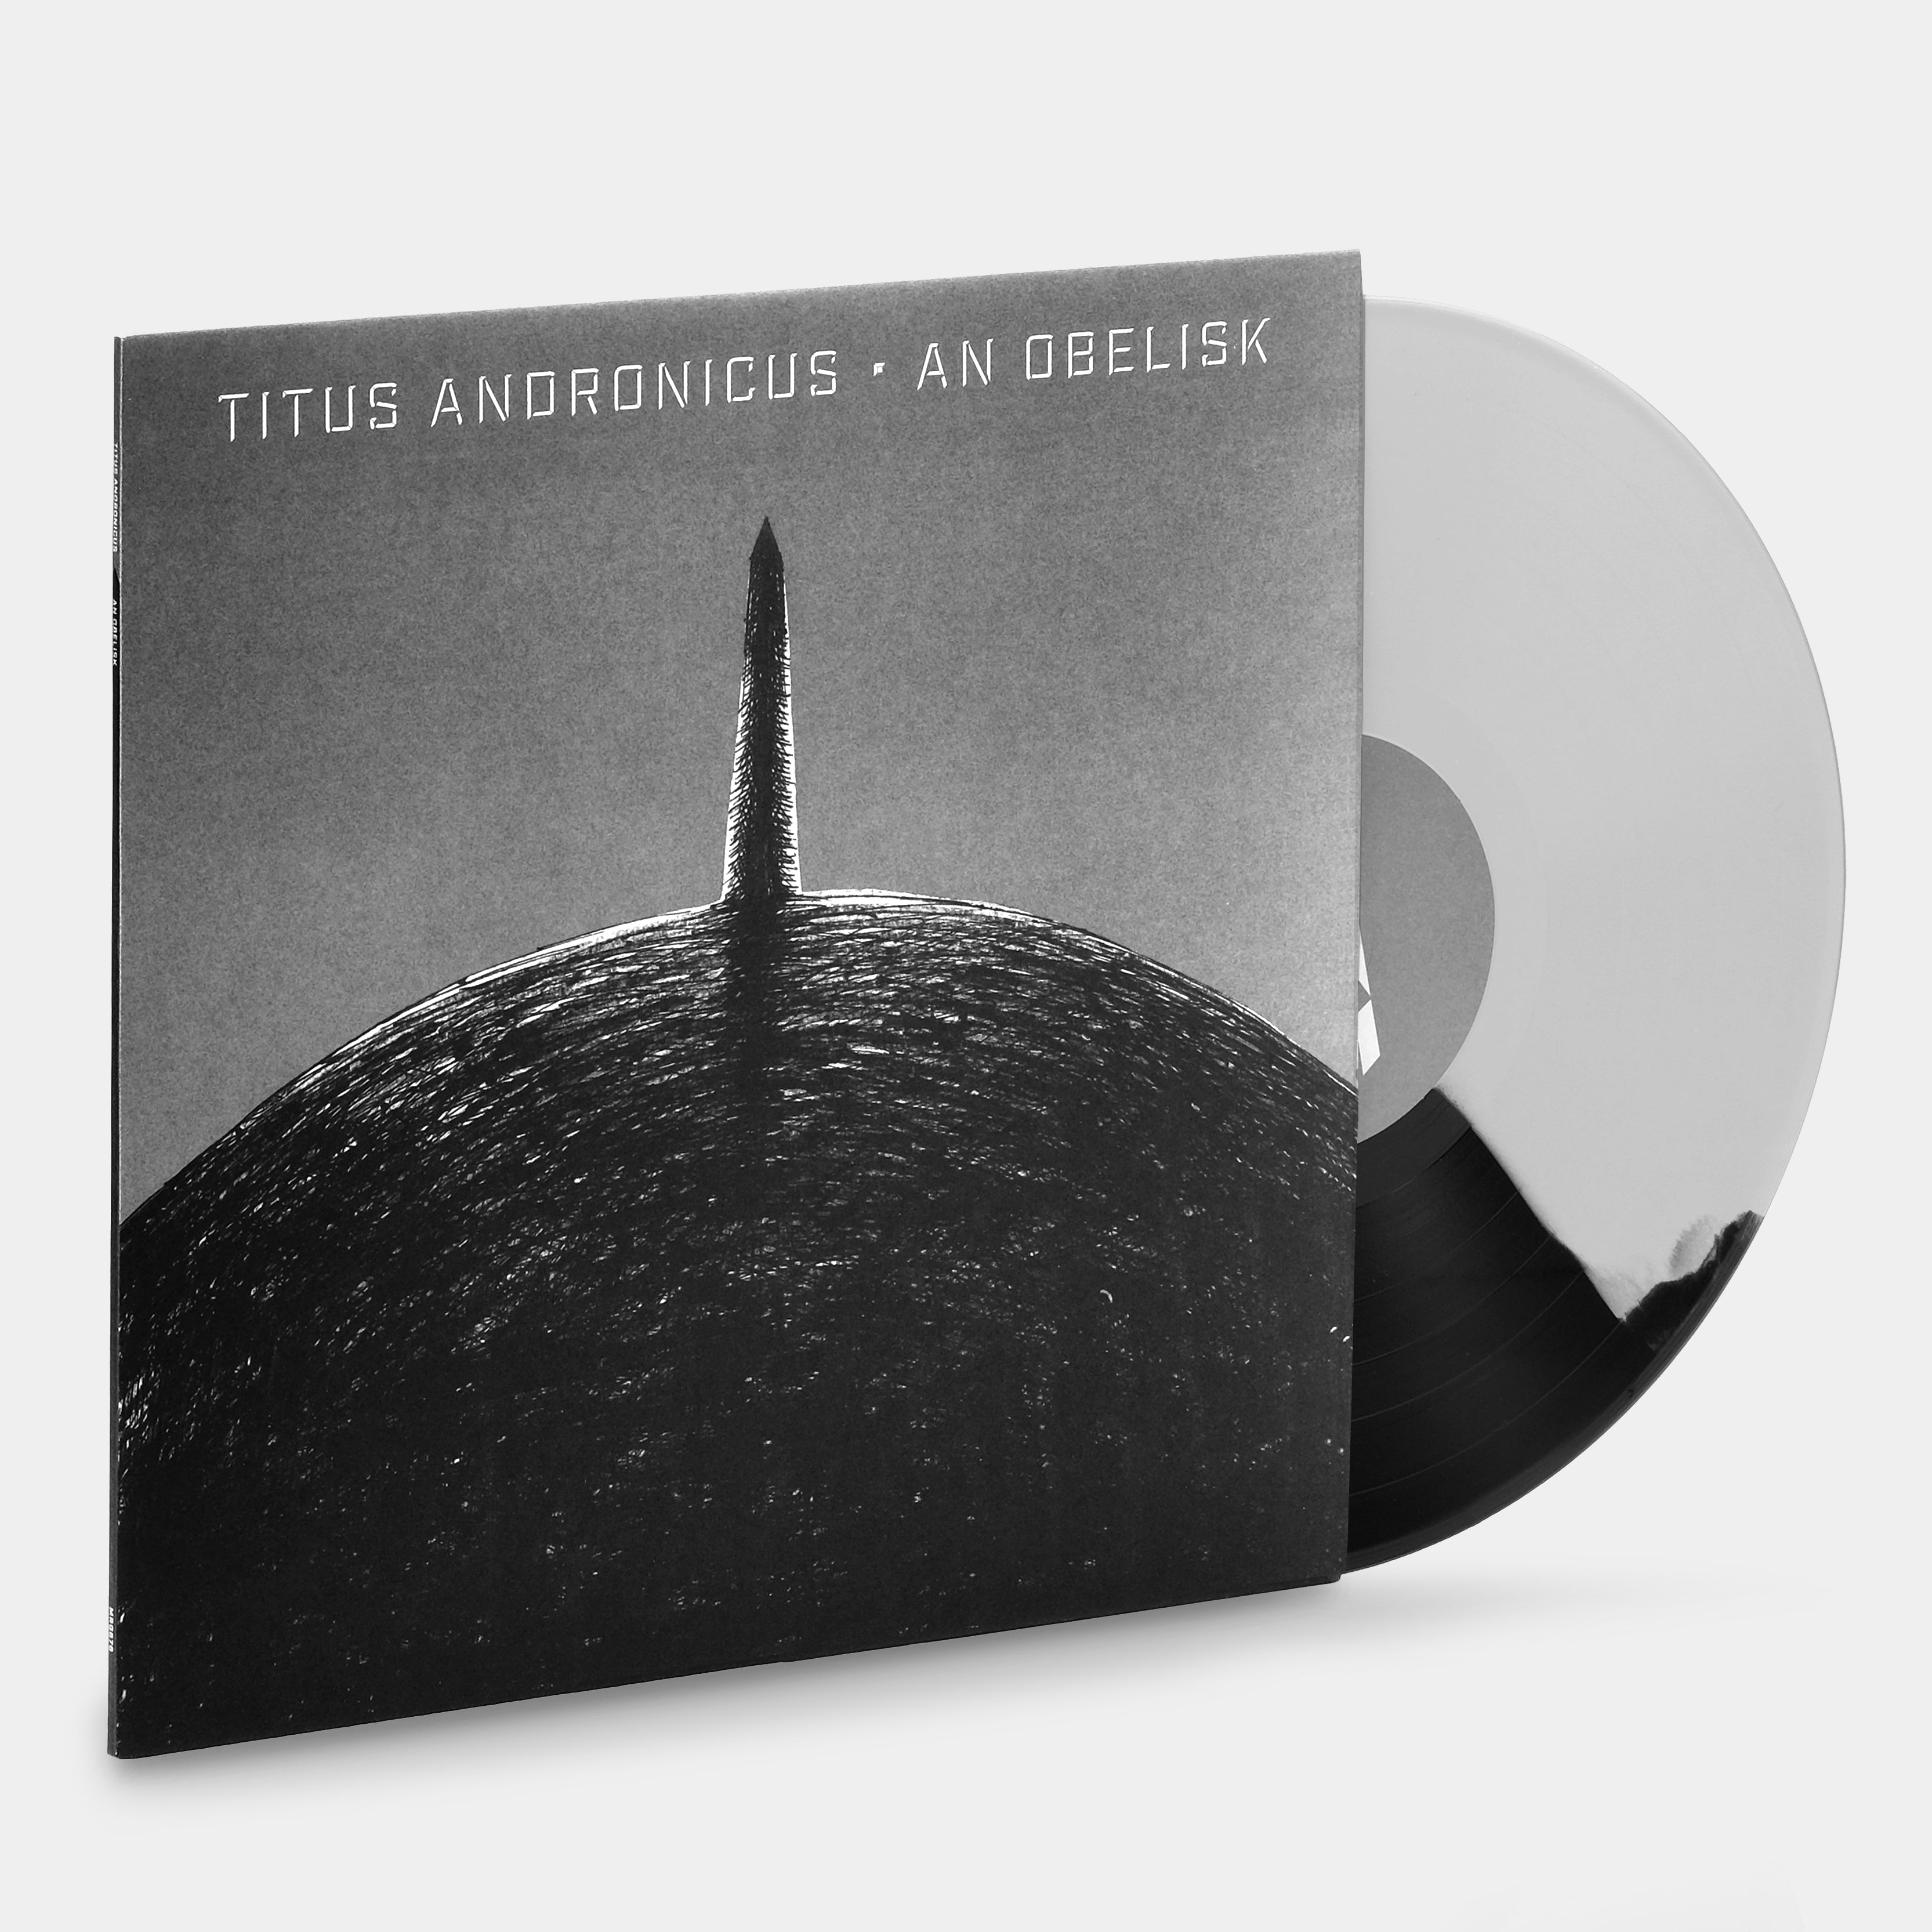 Titus Andronicus - An Obelisk (Peak Vinyl Edition) LP Grey and Black Vinyl Record